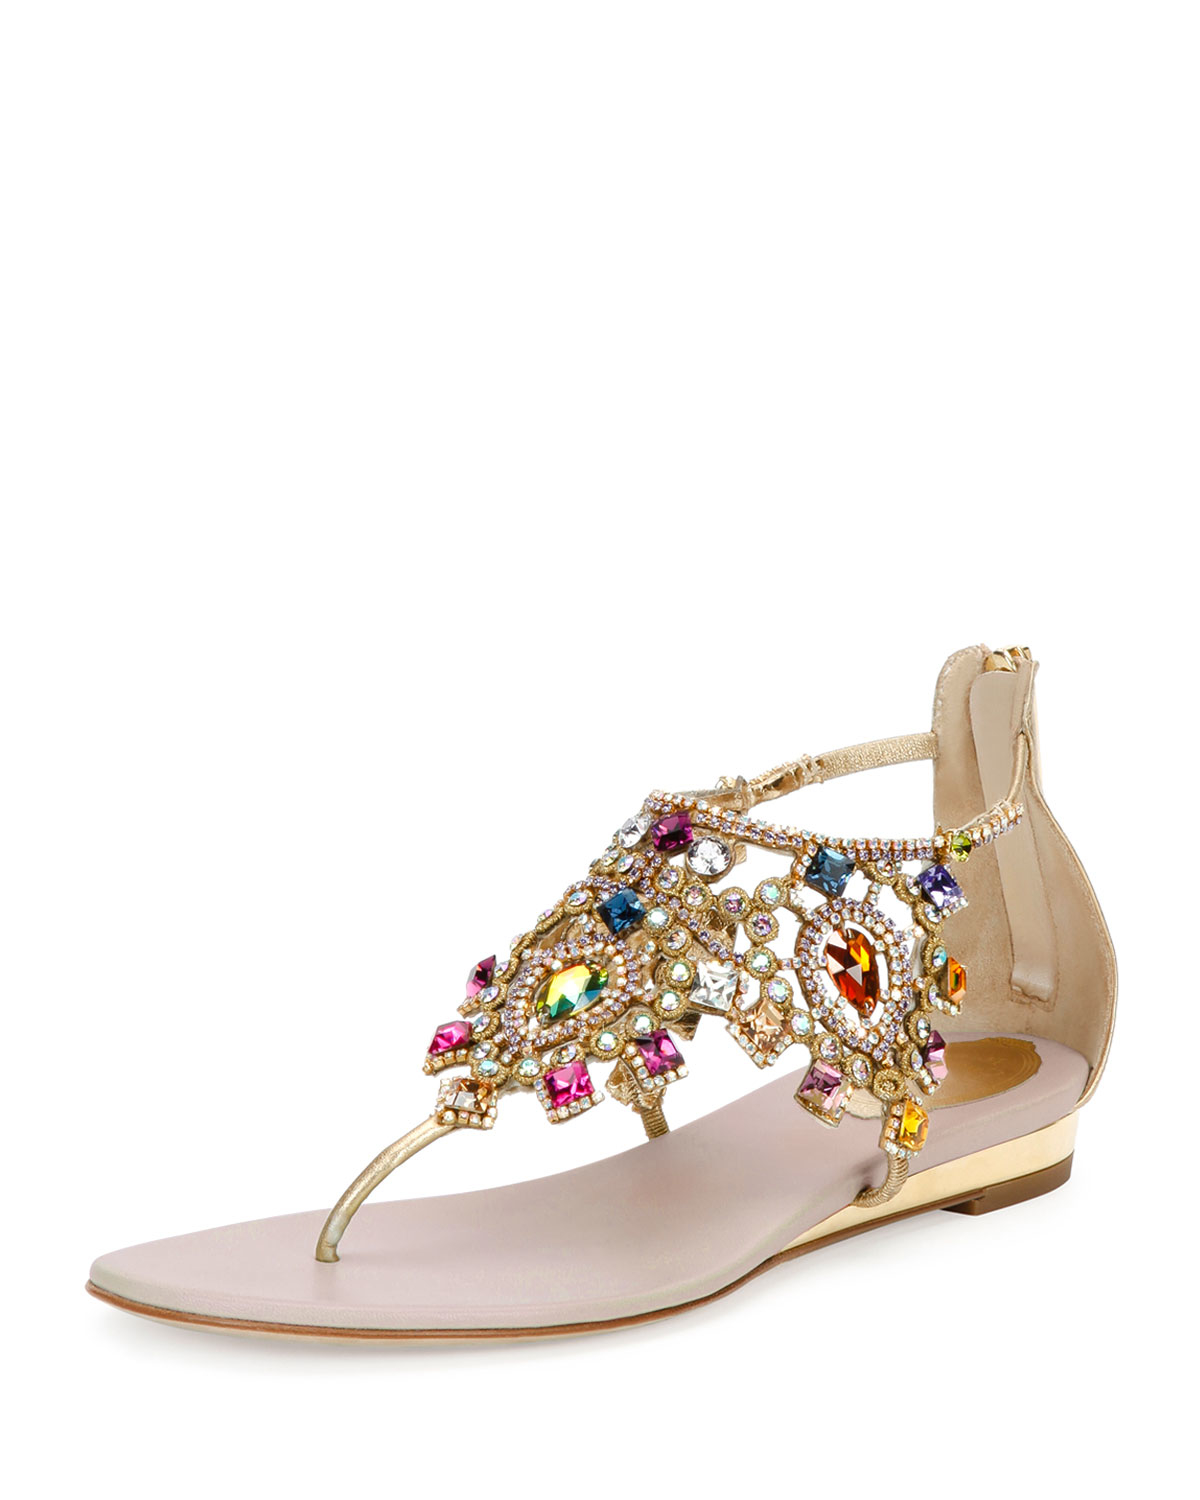 Lyst - Rene Caovilla Jewel-embellished Flat Thong Sandal in Metallic